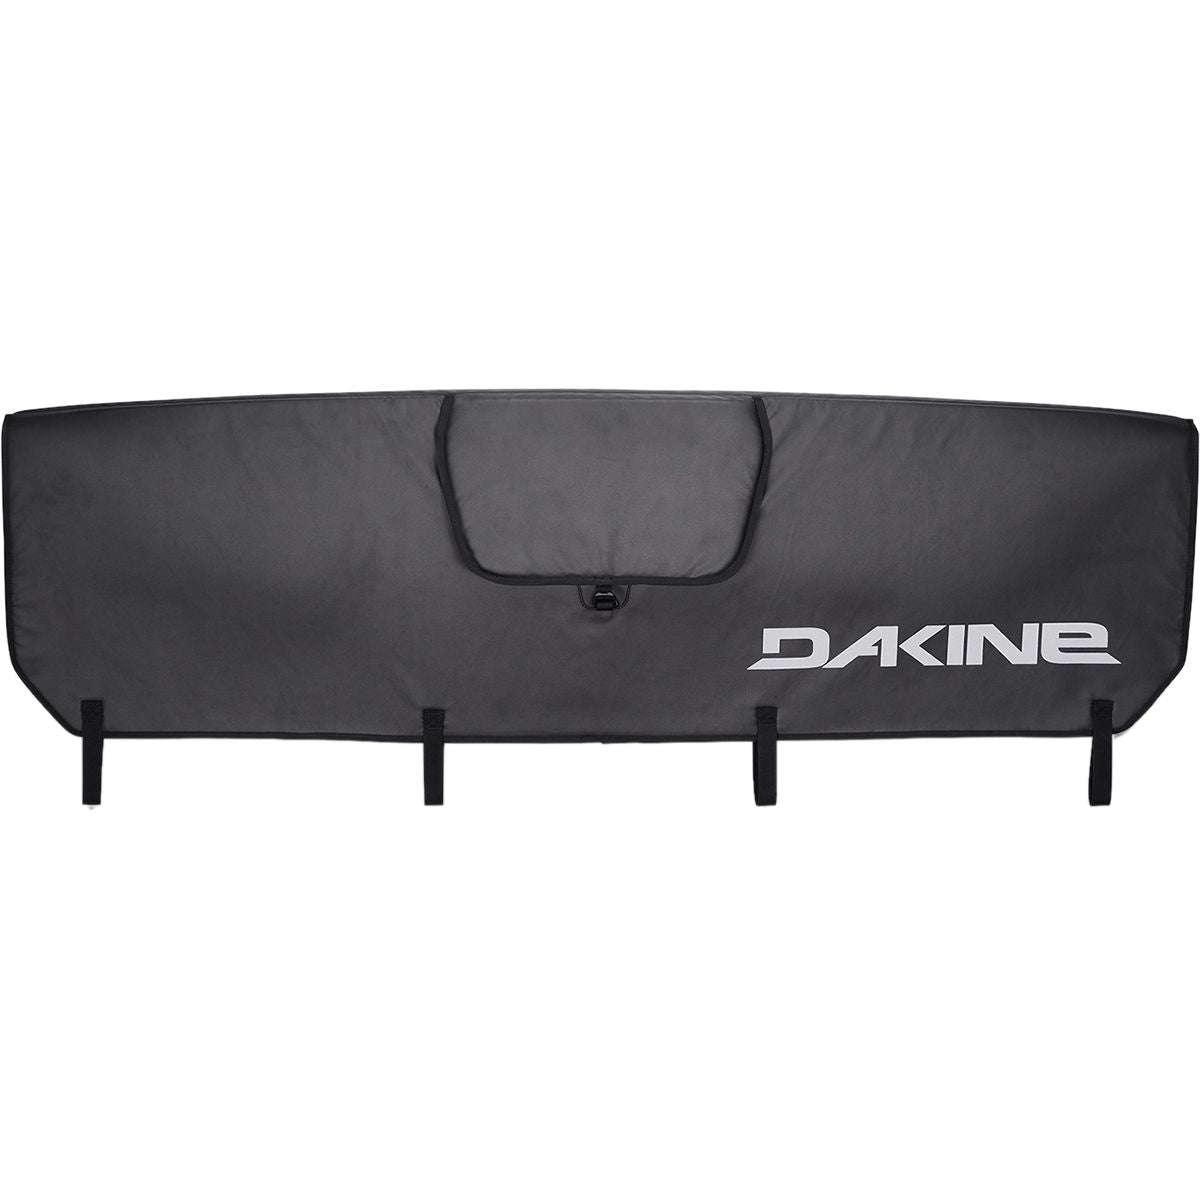 Dakine Pickup Pad DLX Curve Black Large